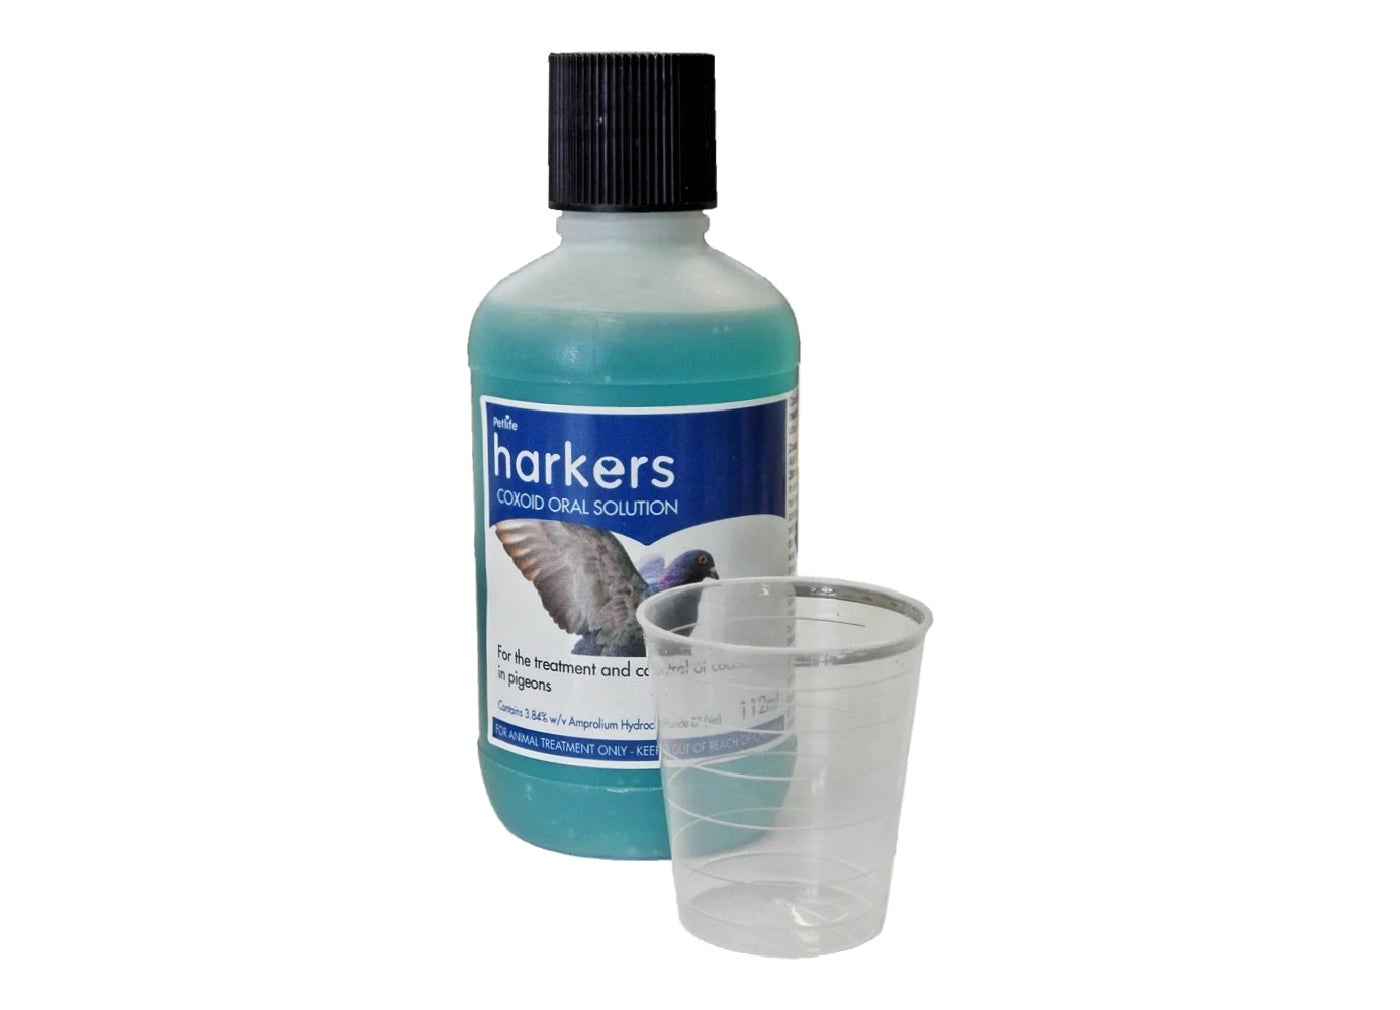 Harkers Coxoid (Treats Coccidiosis in Birds) - Buy Online SPR Centre UK